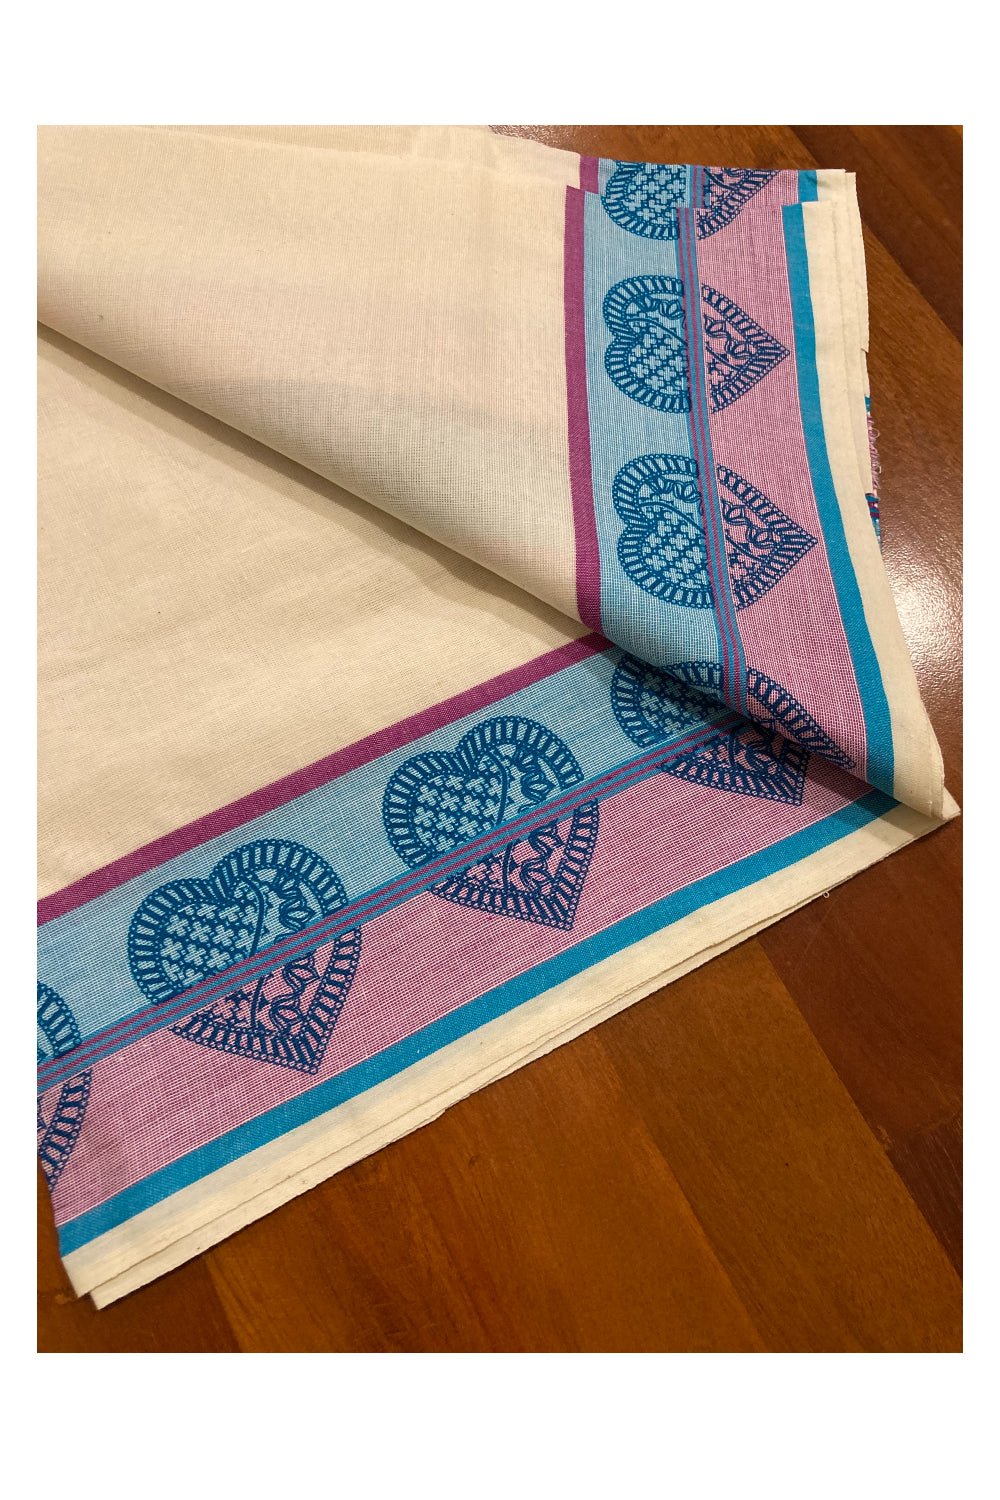 Kerala Cotton Set Mundu (Mundum Neriyathum) with Blue Floral Block Prints on Magenta Blue Border